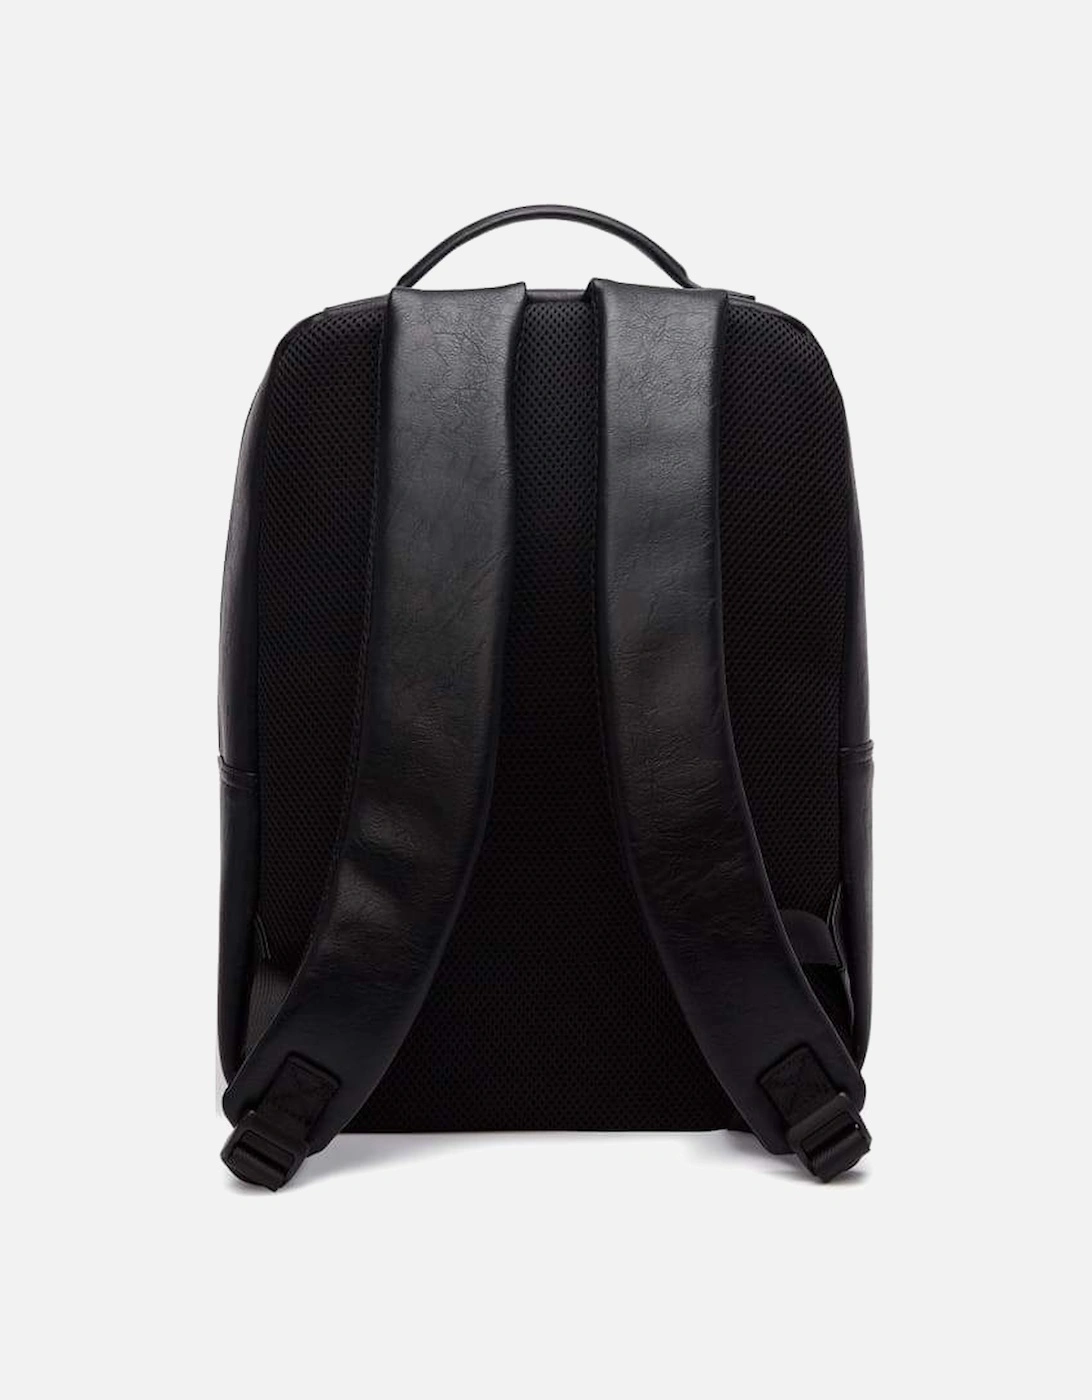 Acacia Black Laptop Backpack